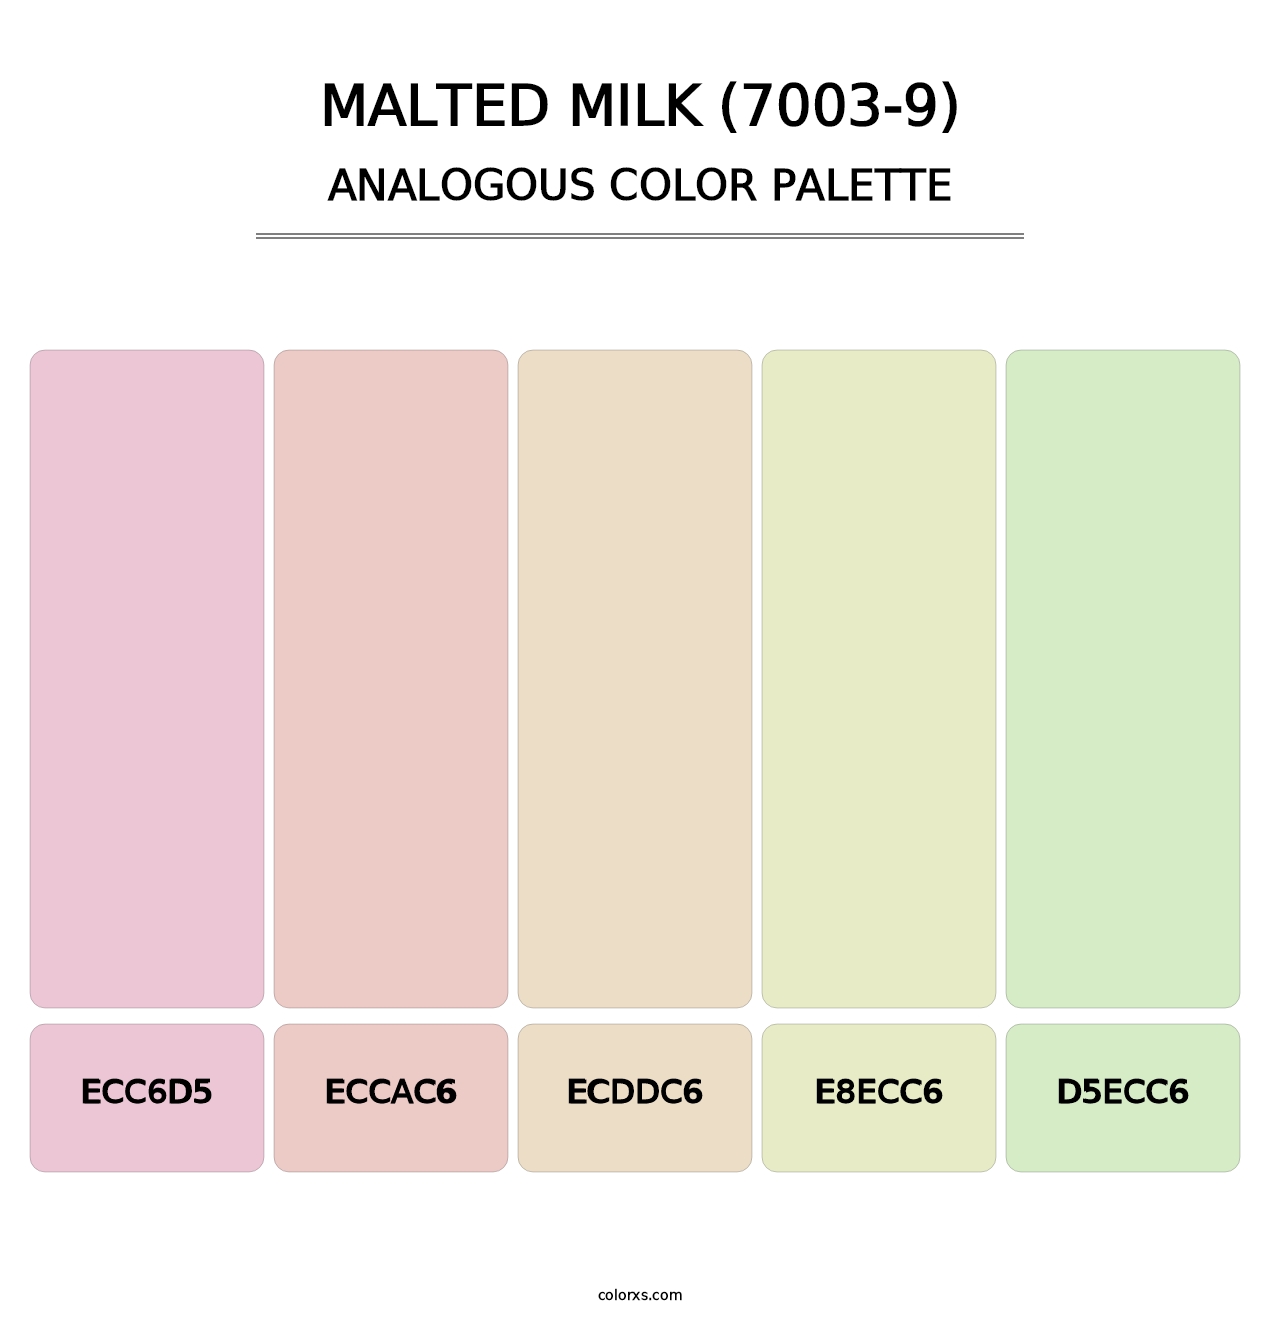 Malted Milk (7003-9) - Analogous Color Palette